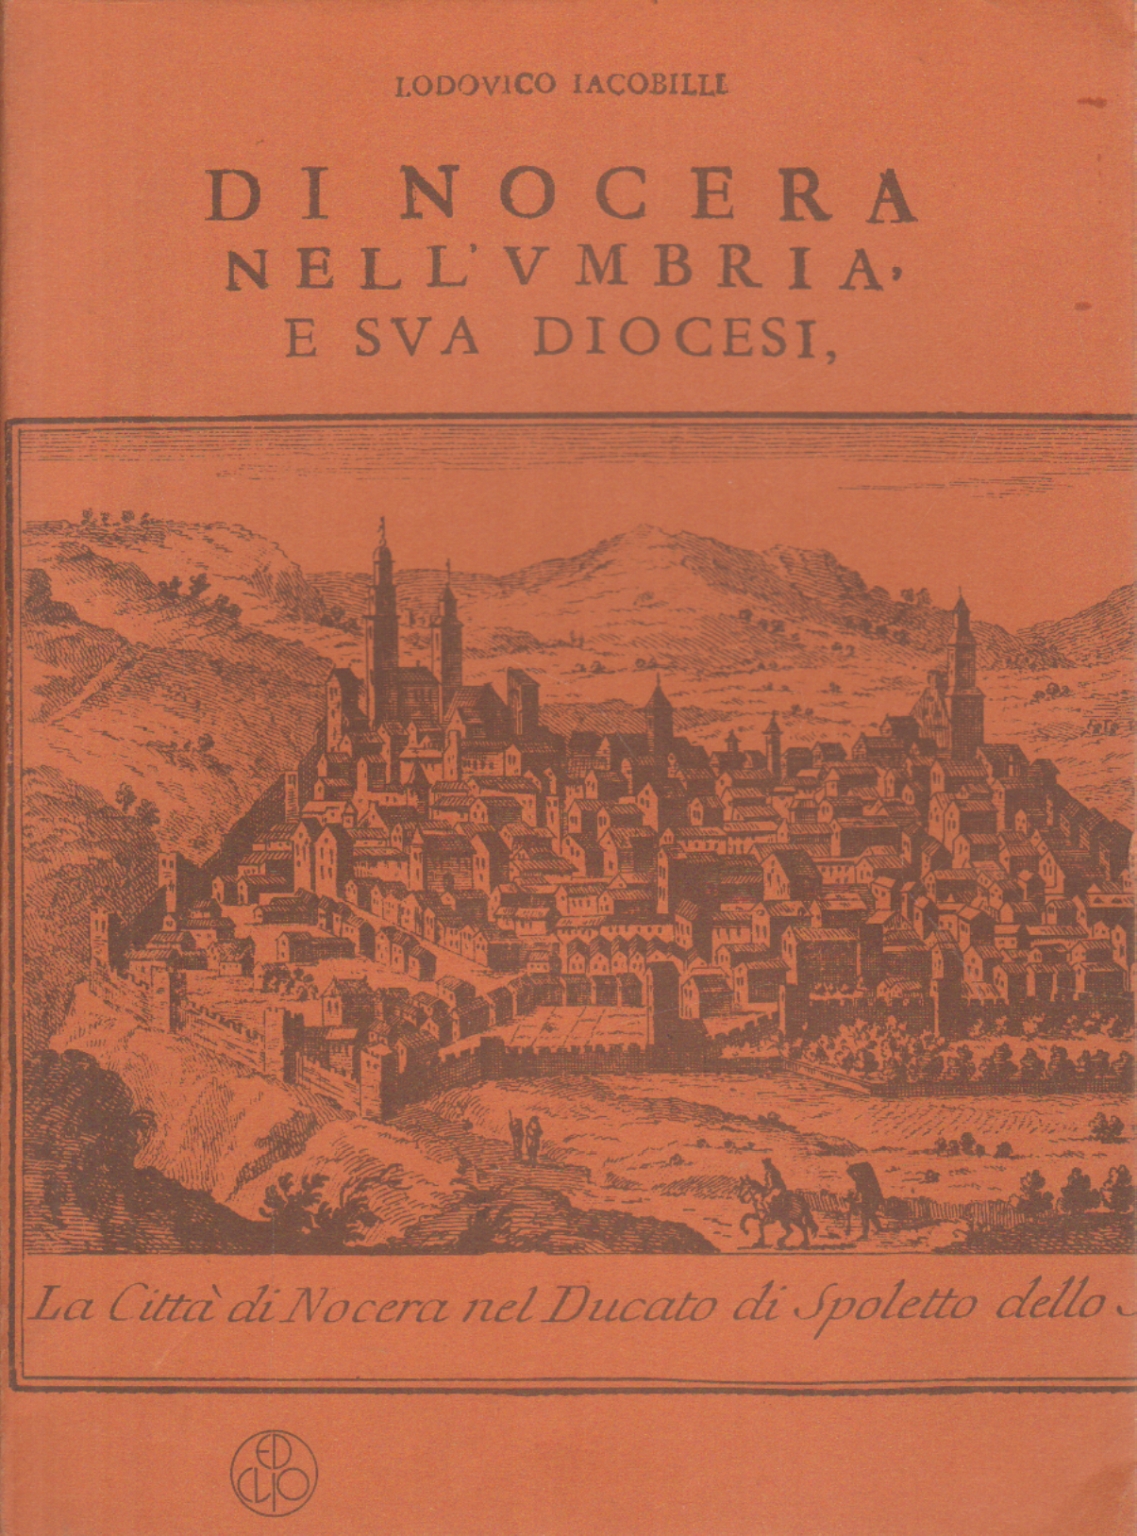 Di Nocera nell'Umbria e sua diocesi, Lodovico Umbriae